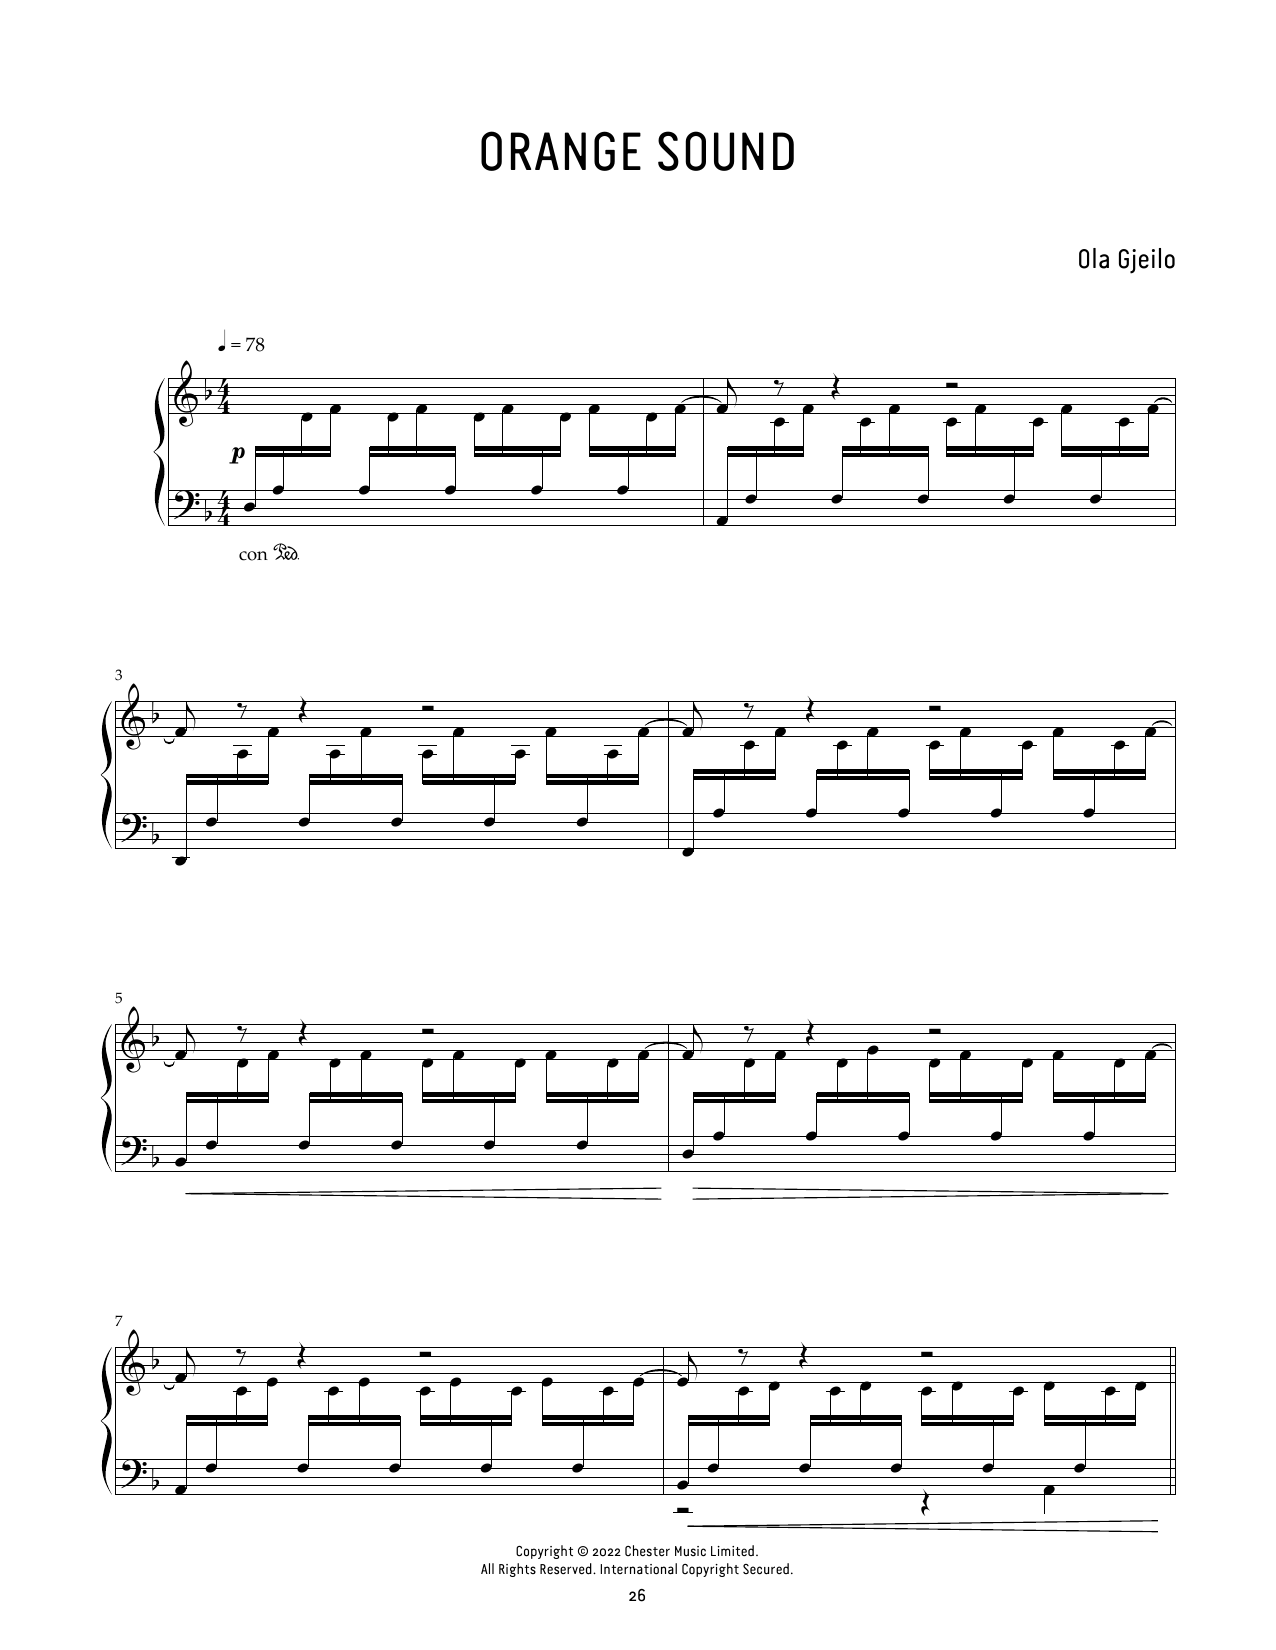 Ola Gjeilo Orange Sound Sheet Music Notes & Chords for Piano Solo - Download or Print PDF